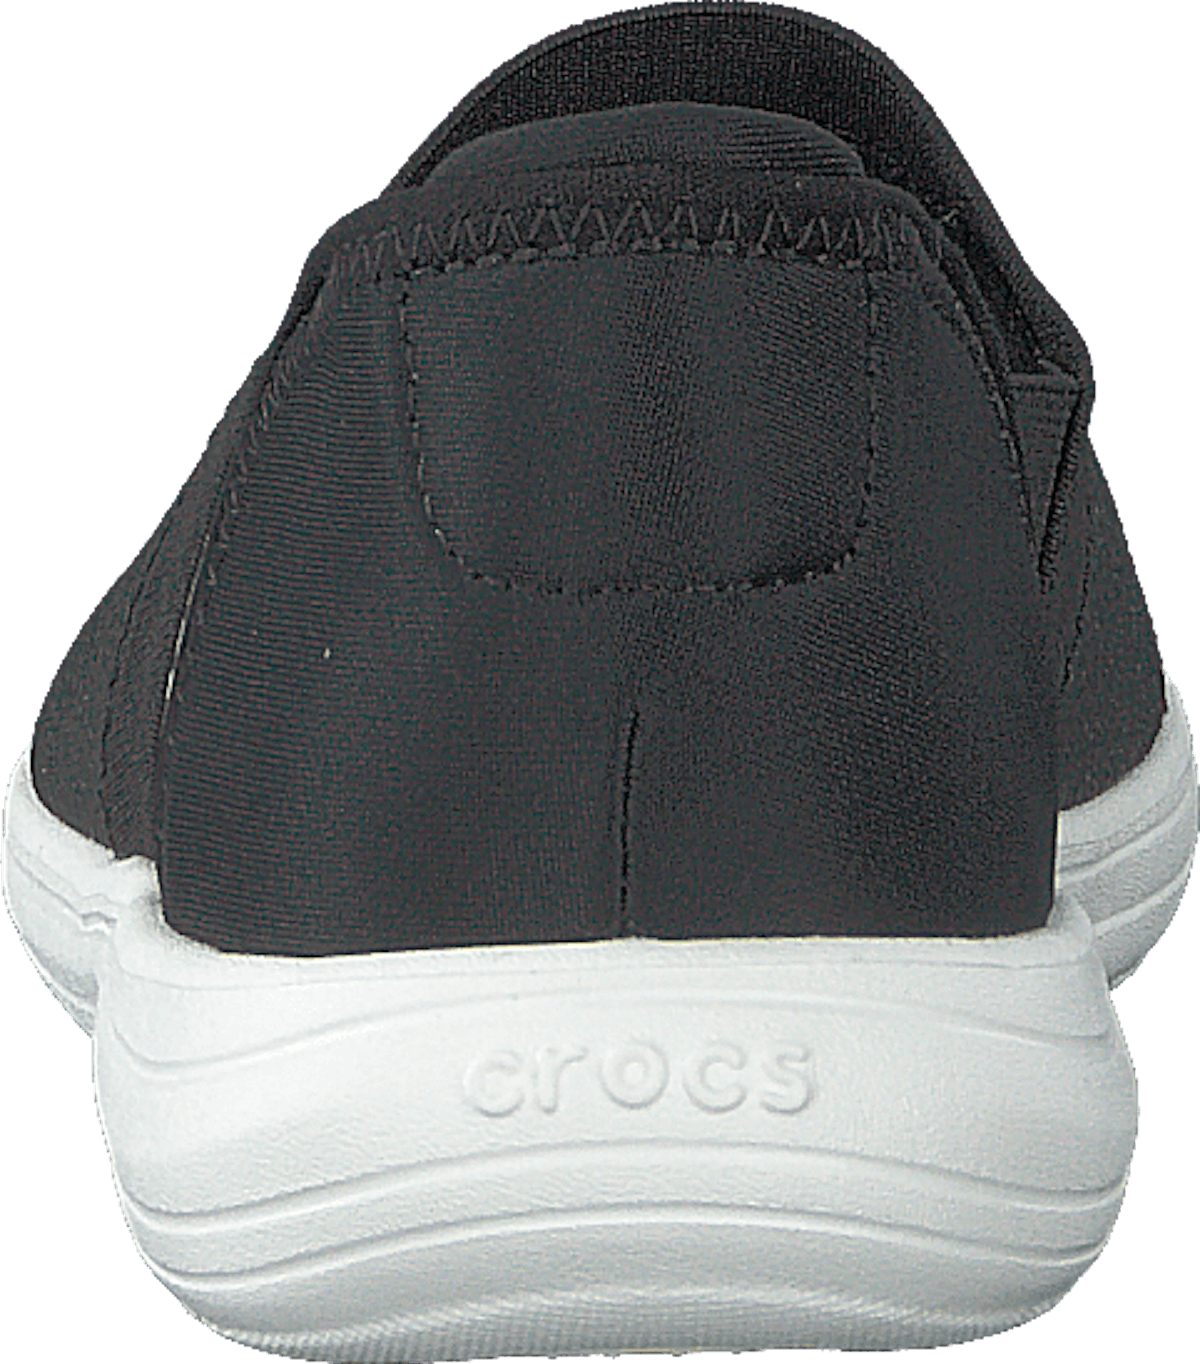 Crocs Reviva Slipon W Black/white